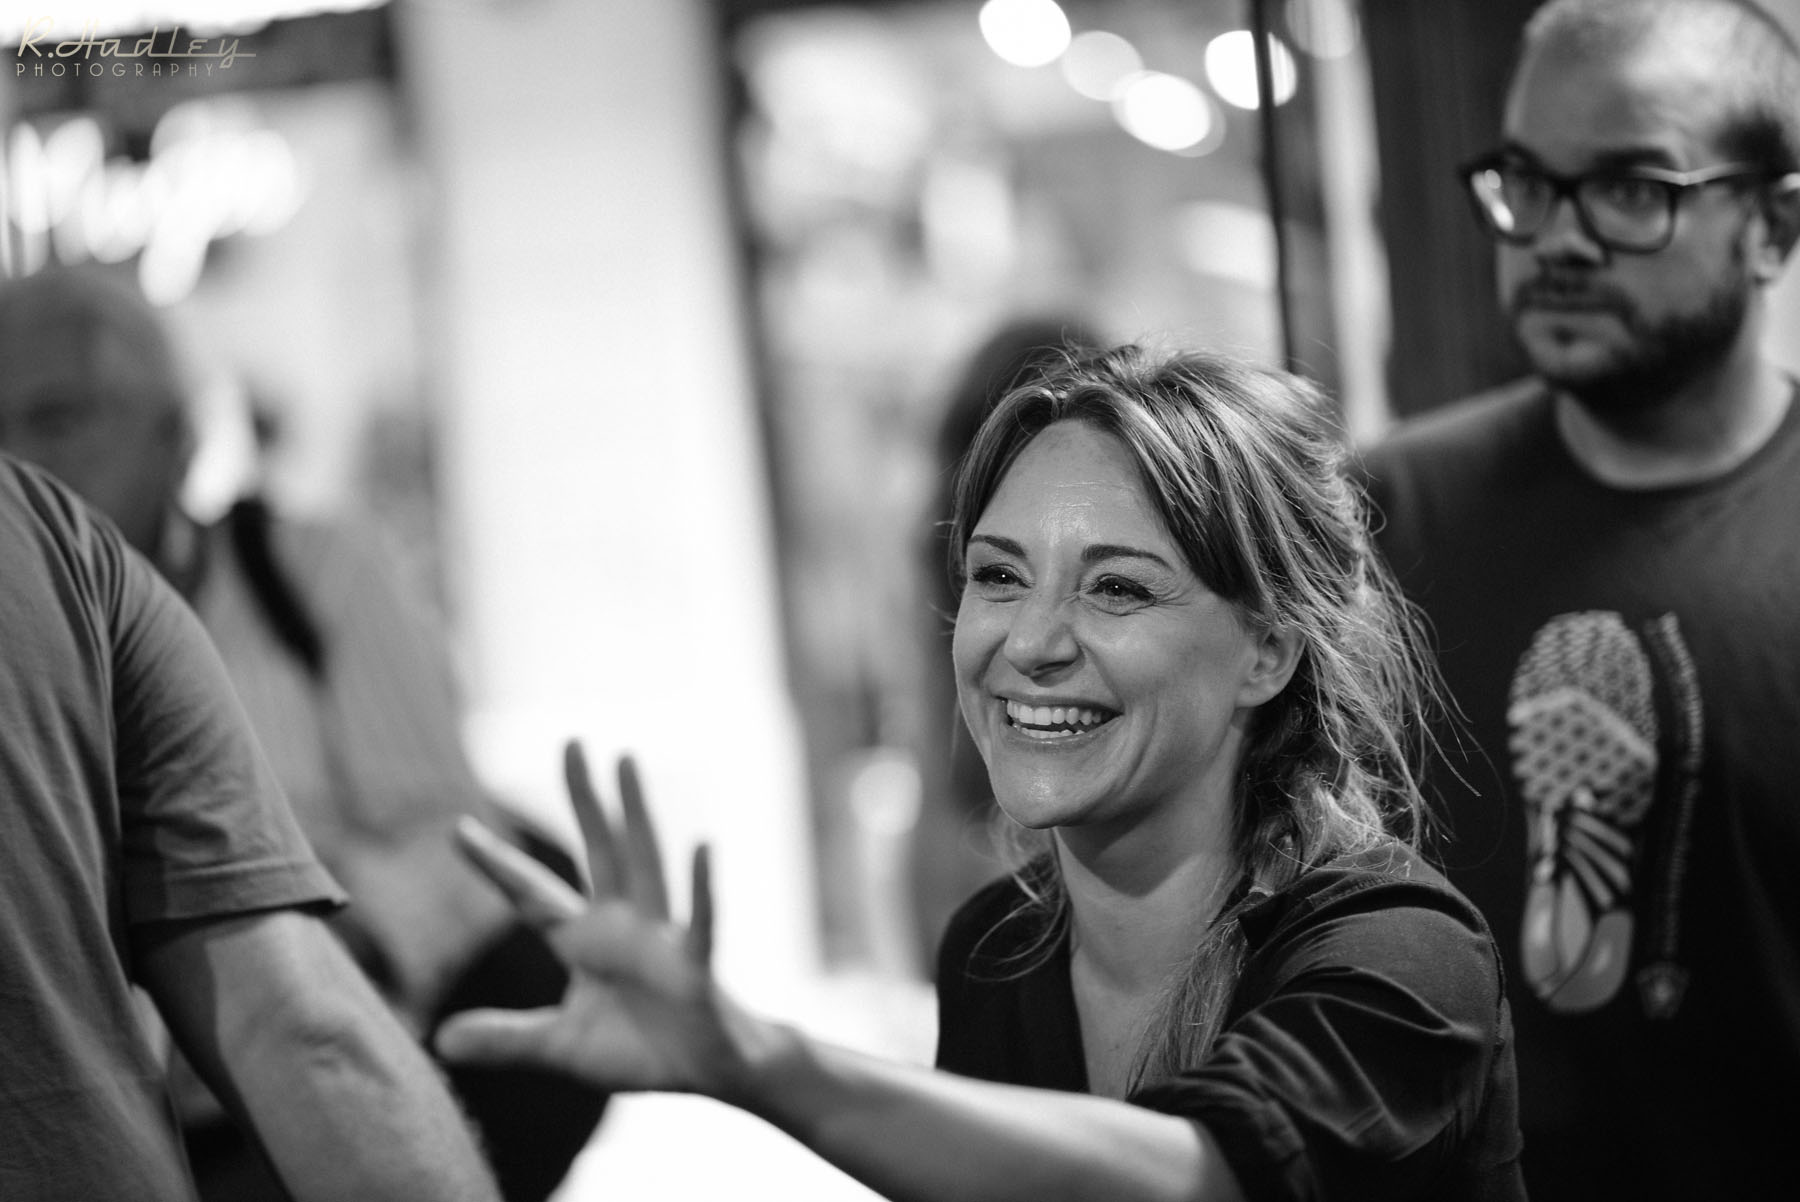 Carolina de Santis directing one of her productions in Barcelona